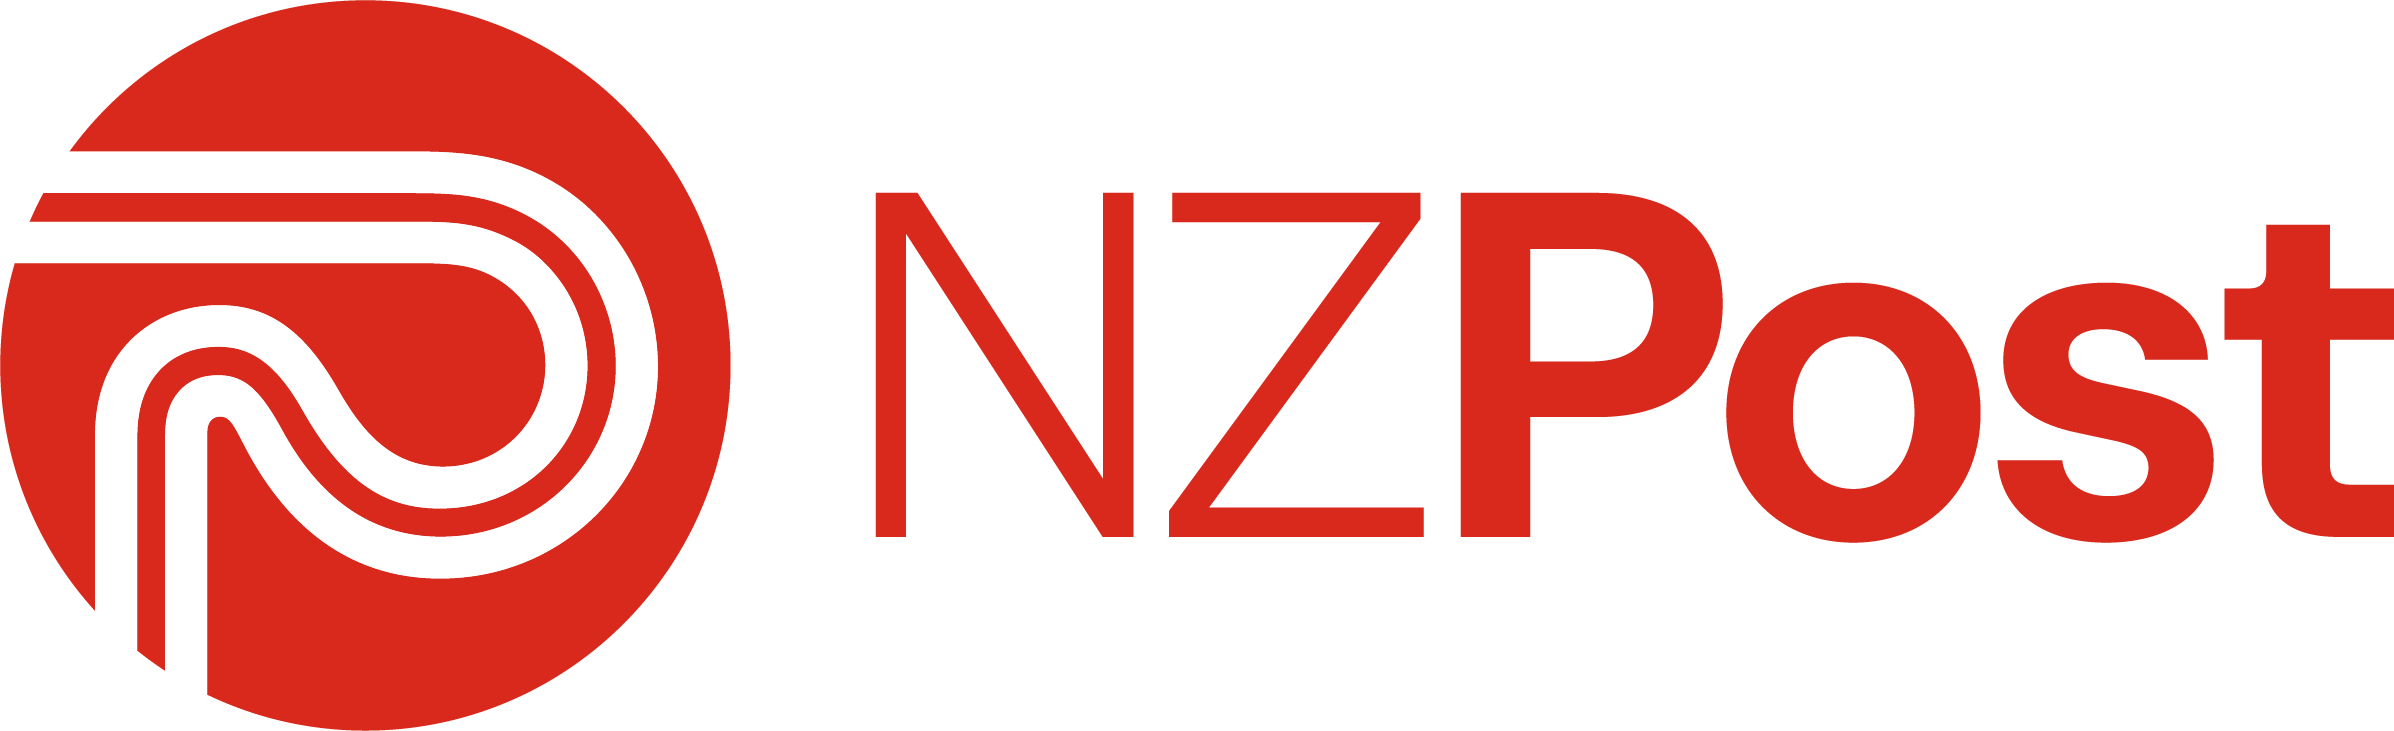 NZ Post